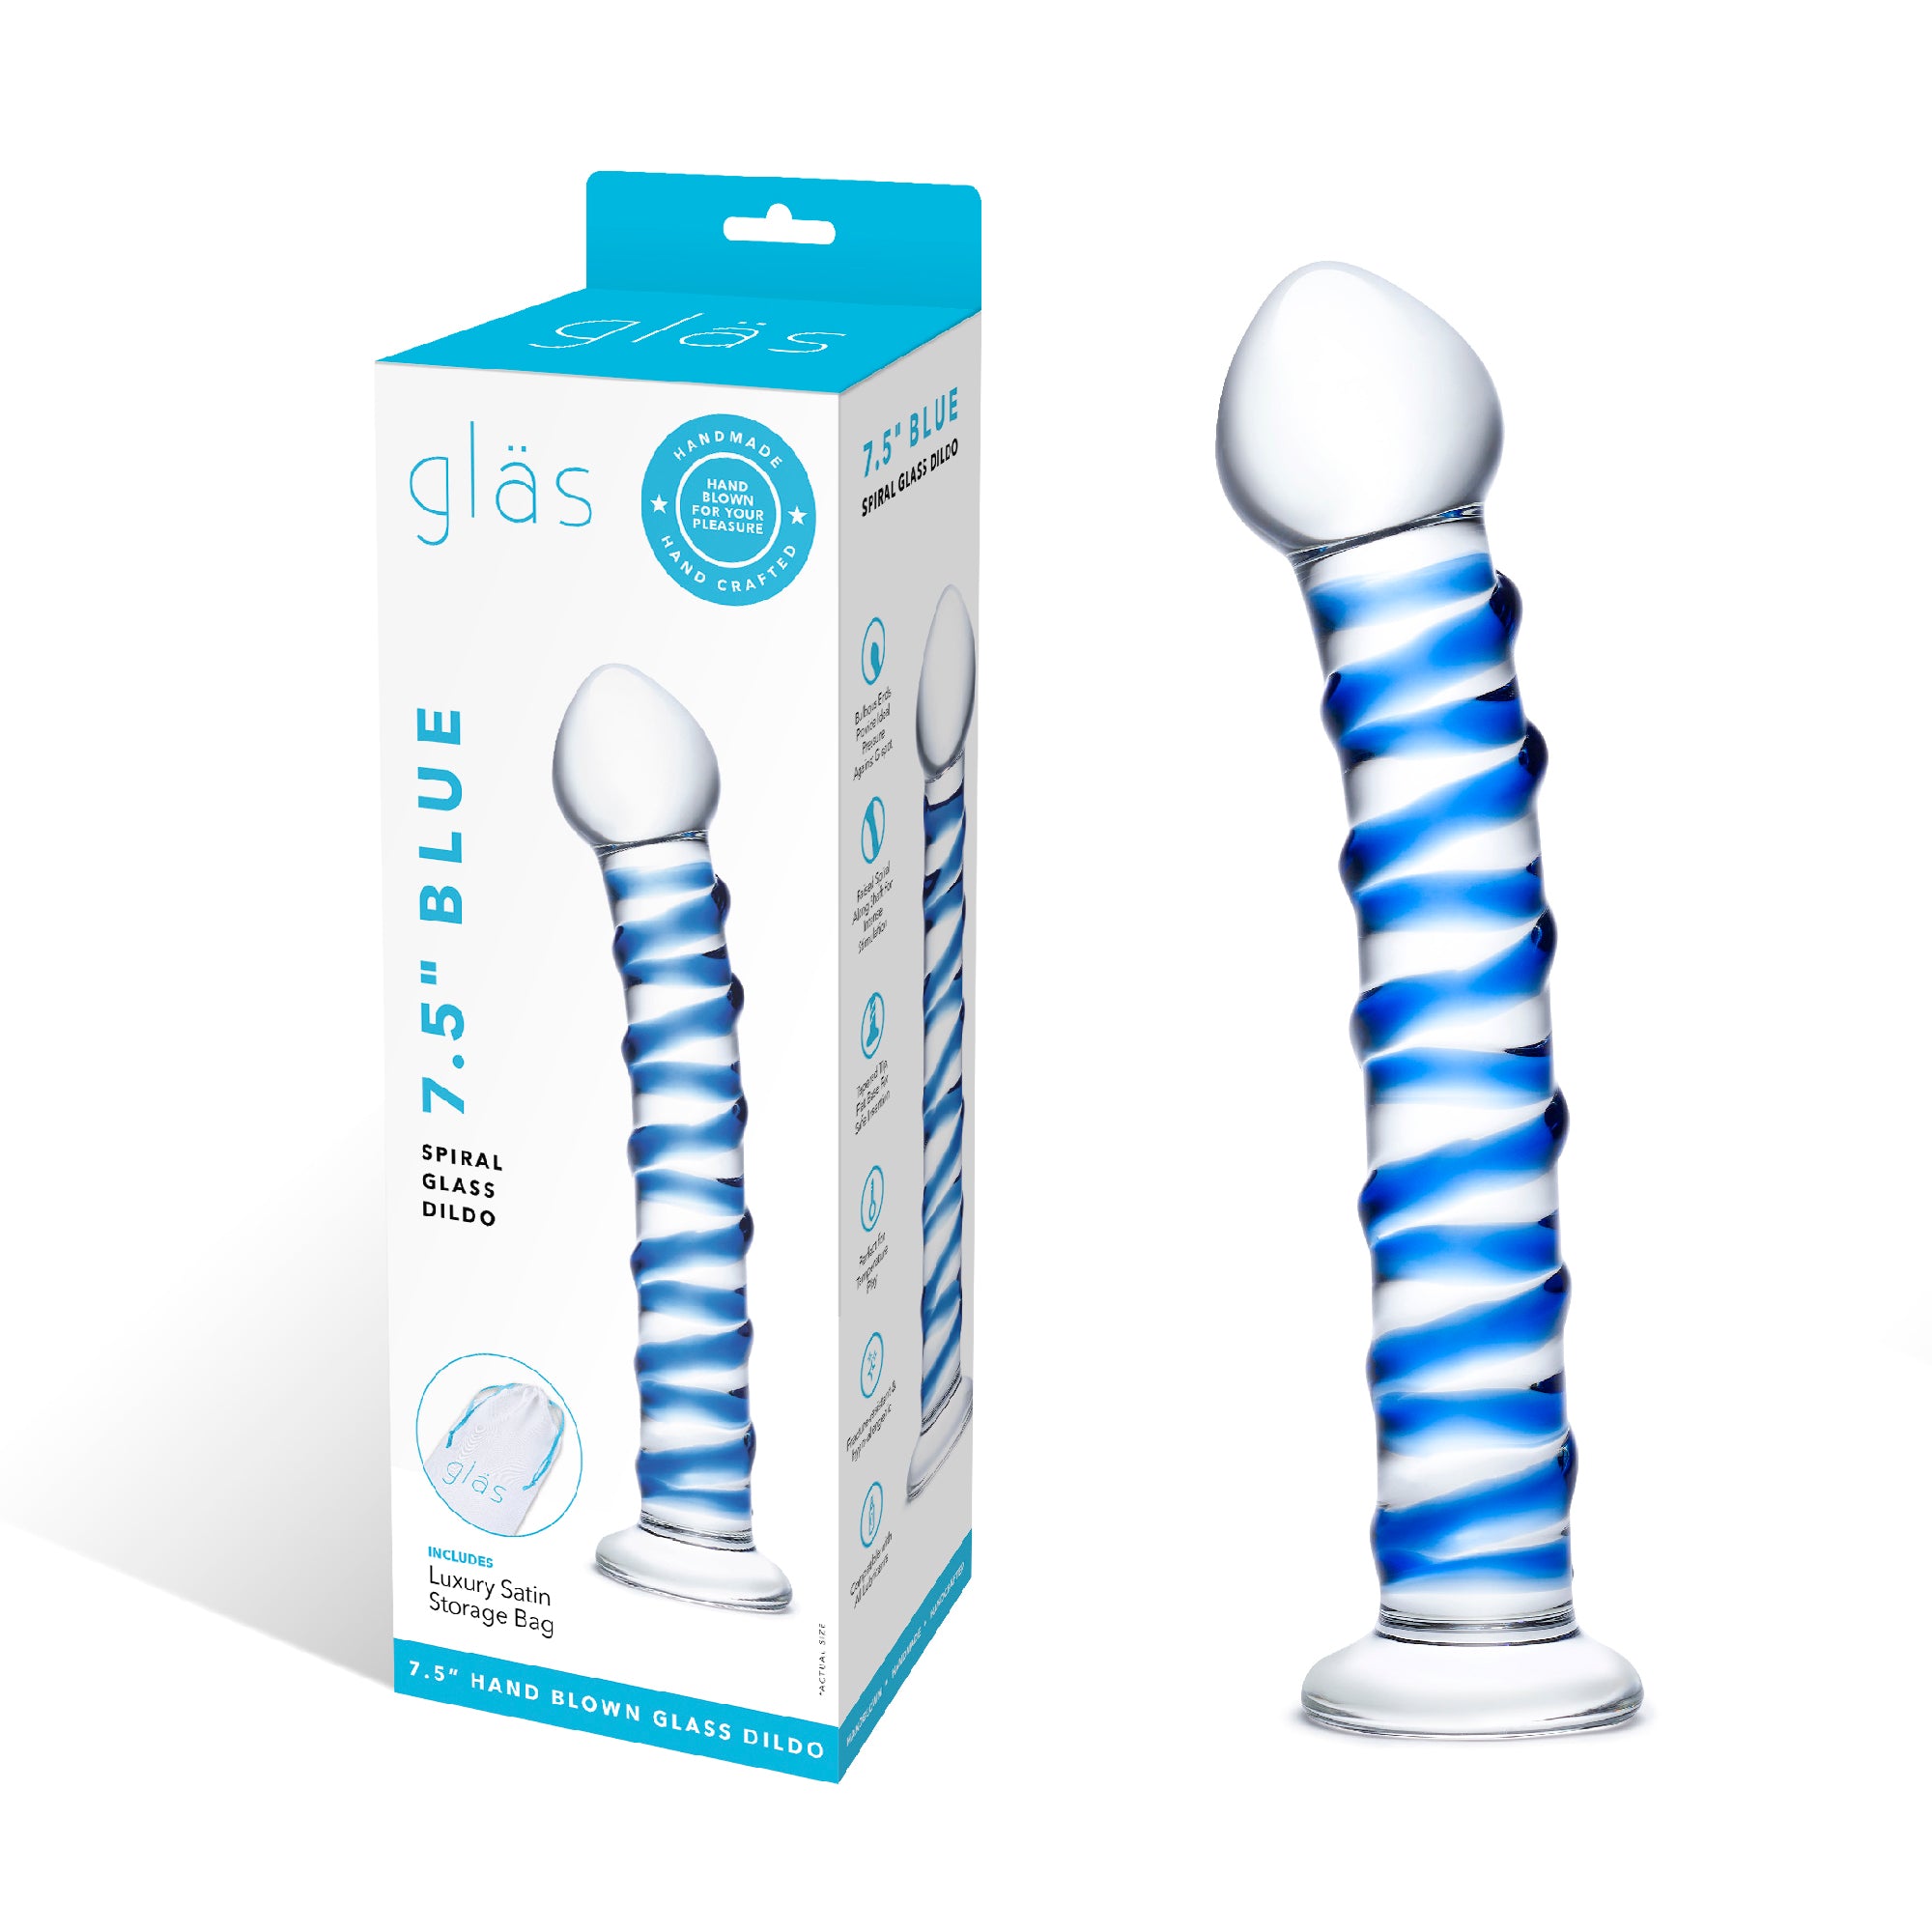 Packaging of the Gläs Blue Spiral Glass Dildo